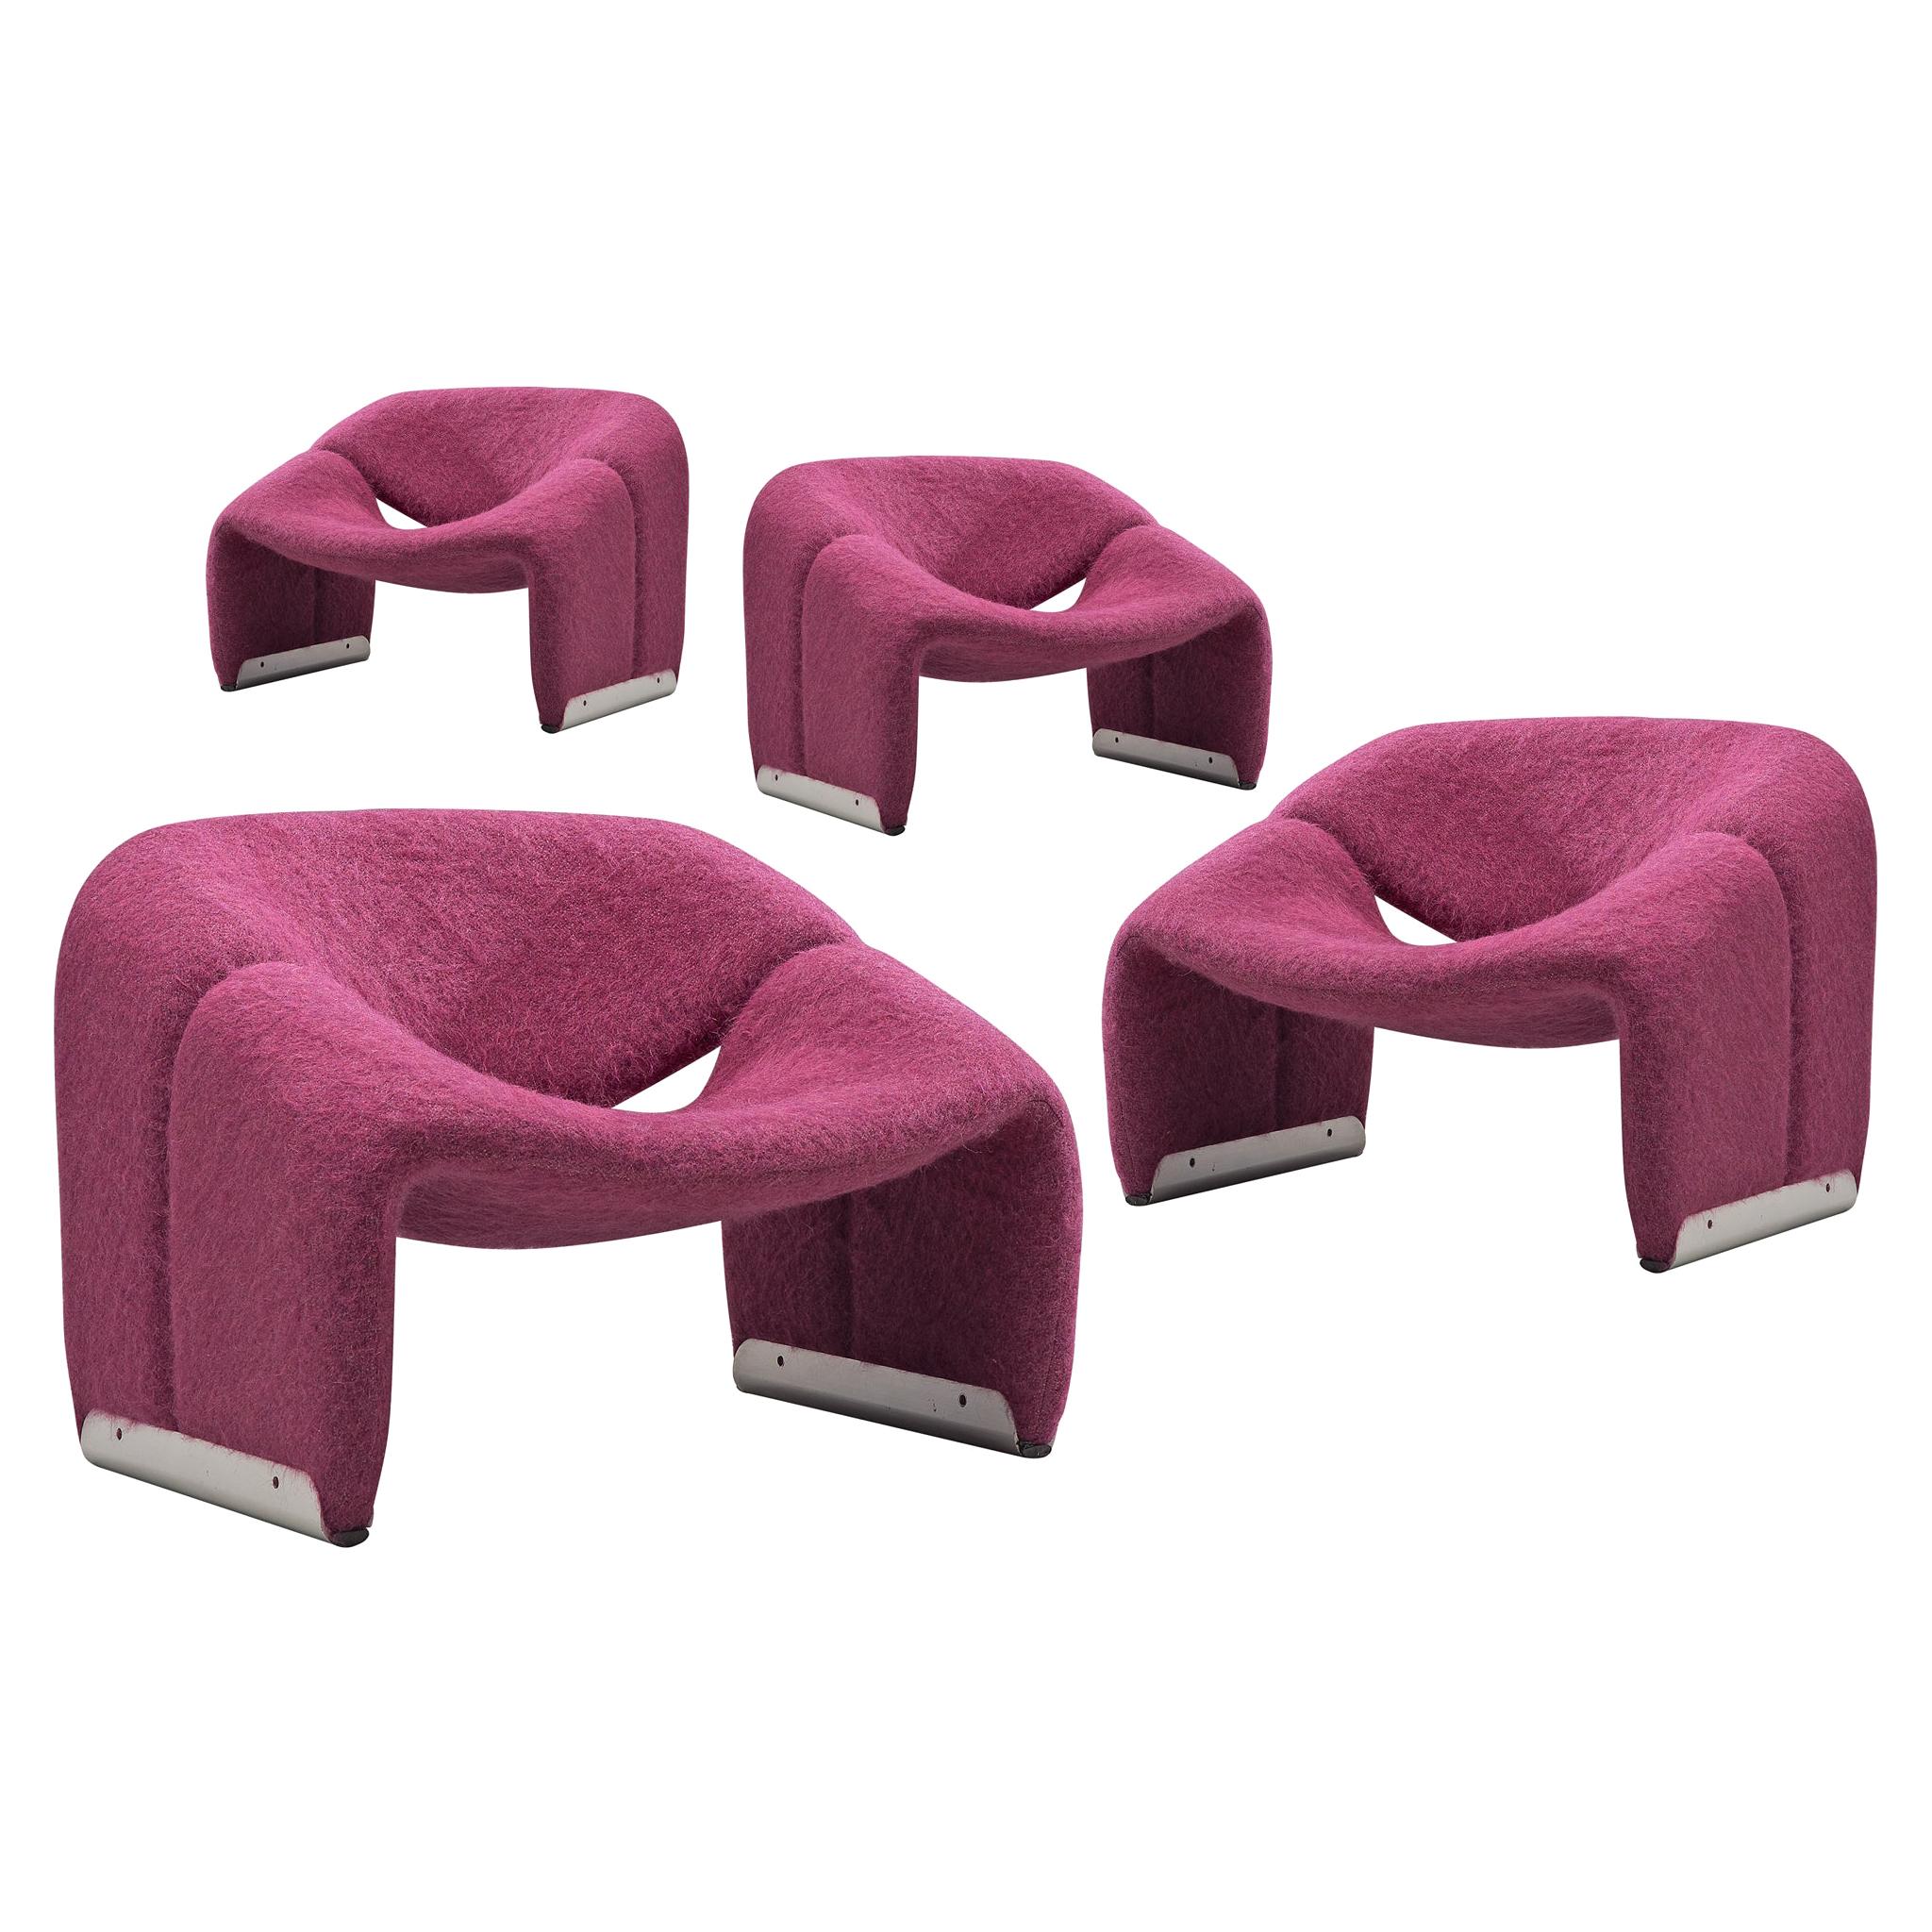 Pierre Paulin 'Groovy' Lounge Chairs Customizable in Pierre Frey Wool Upholstery